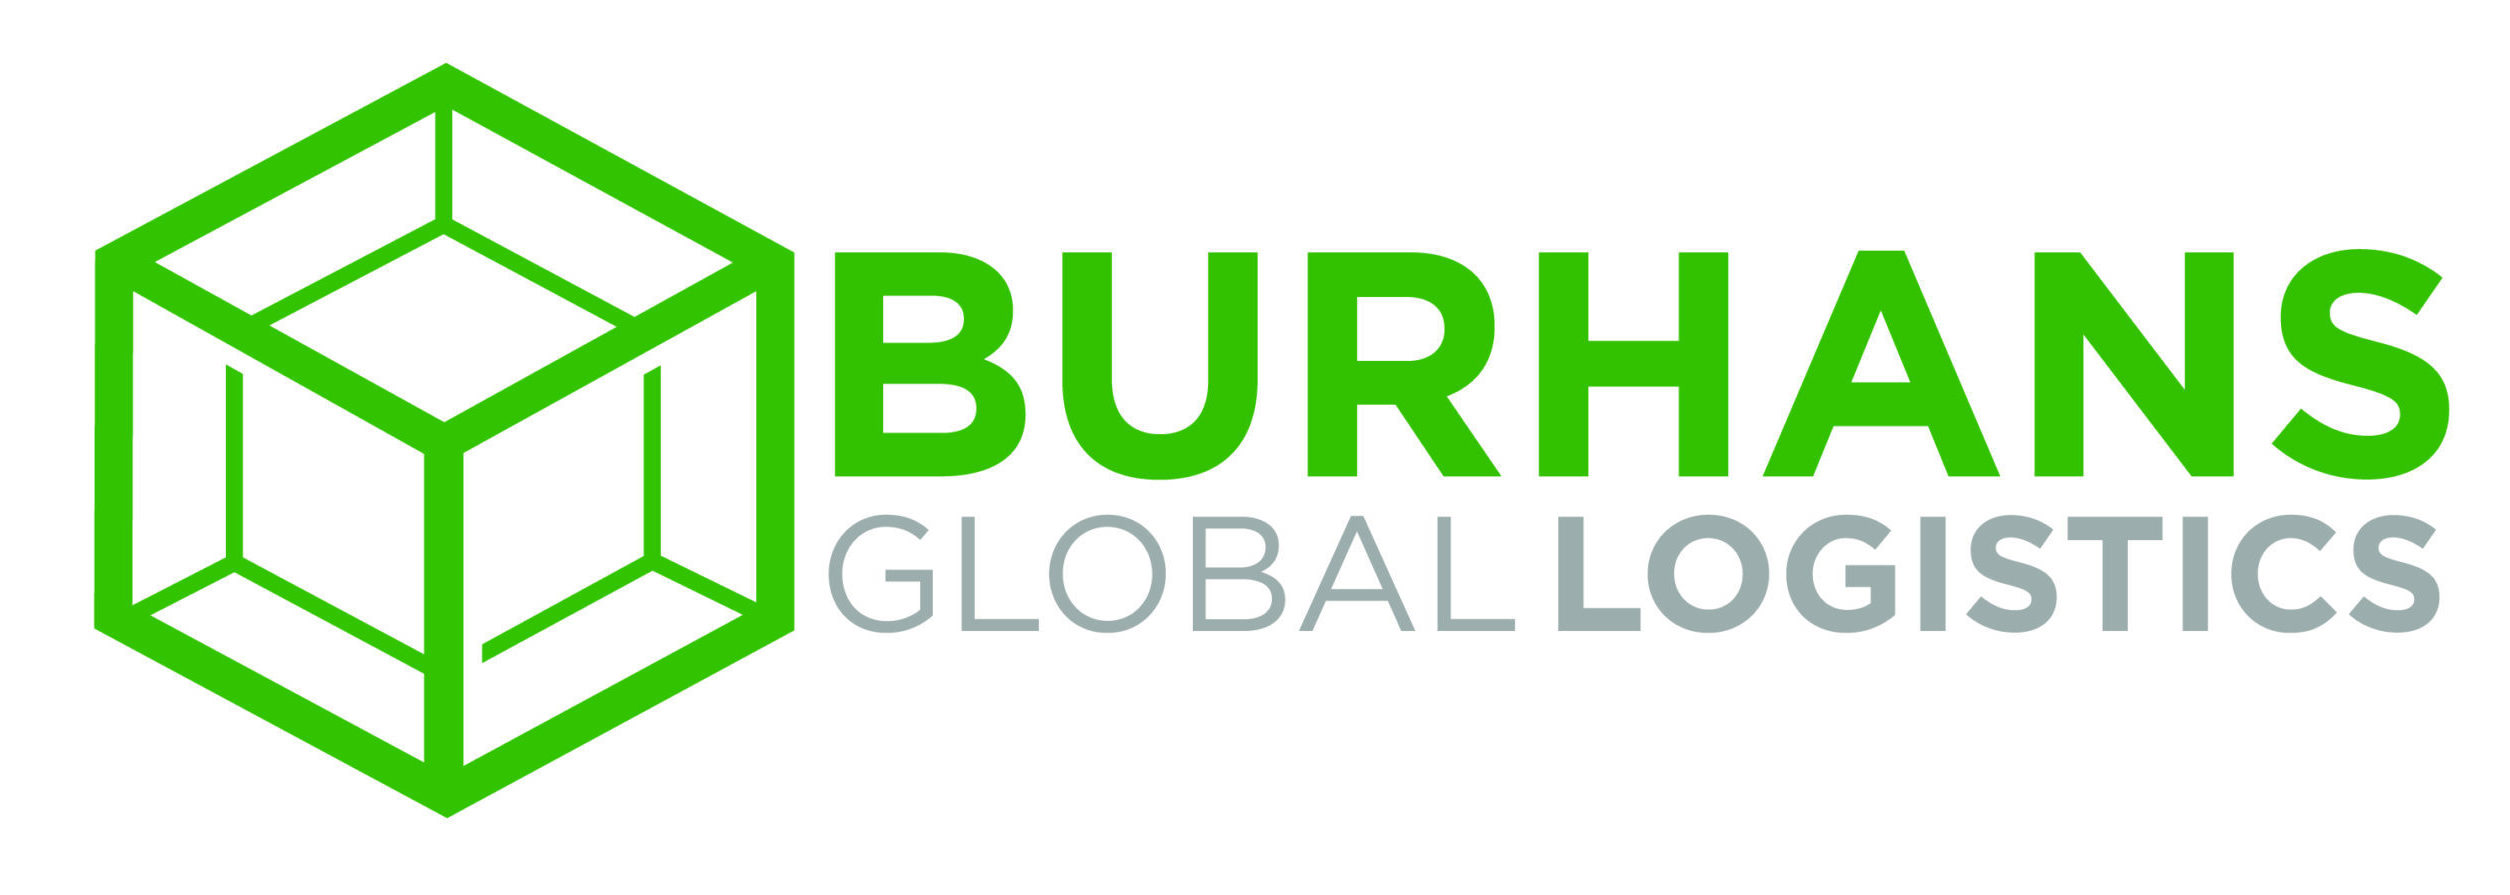 Burhans Global Logistics